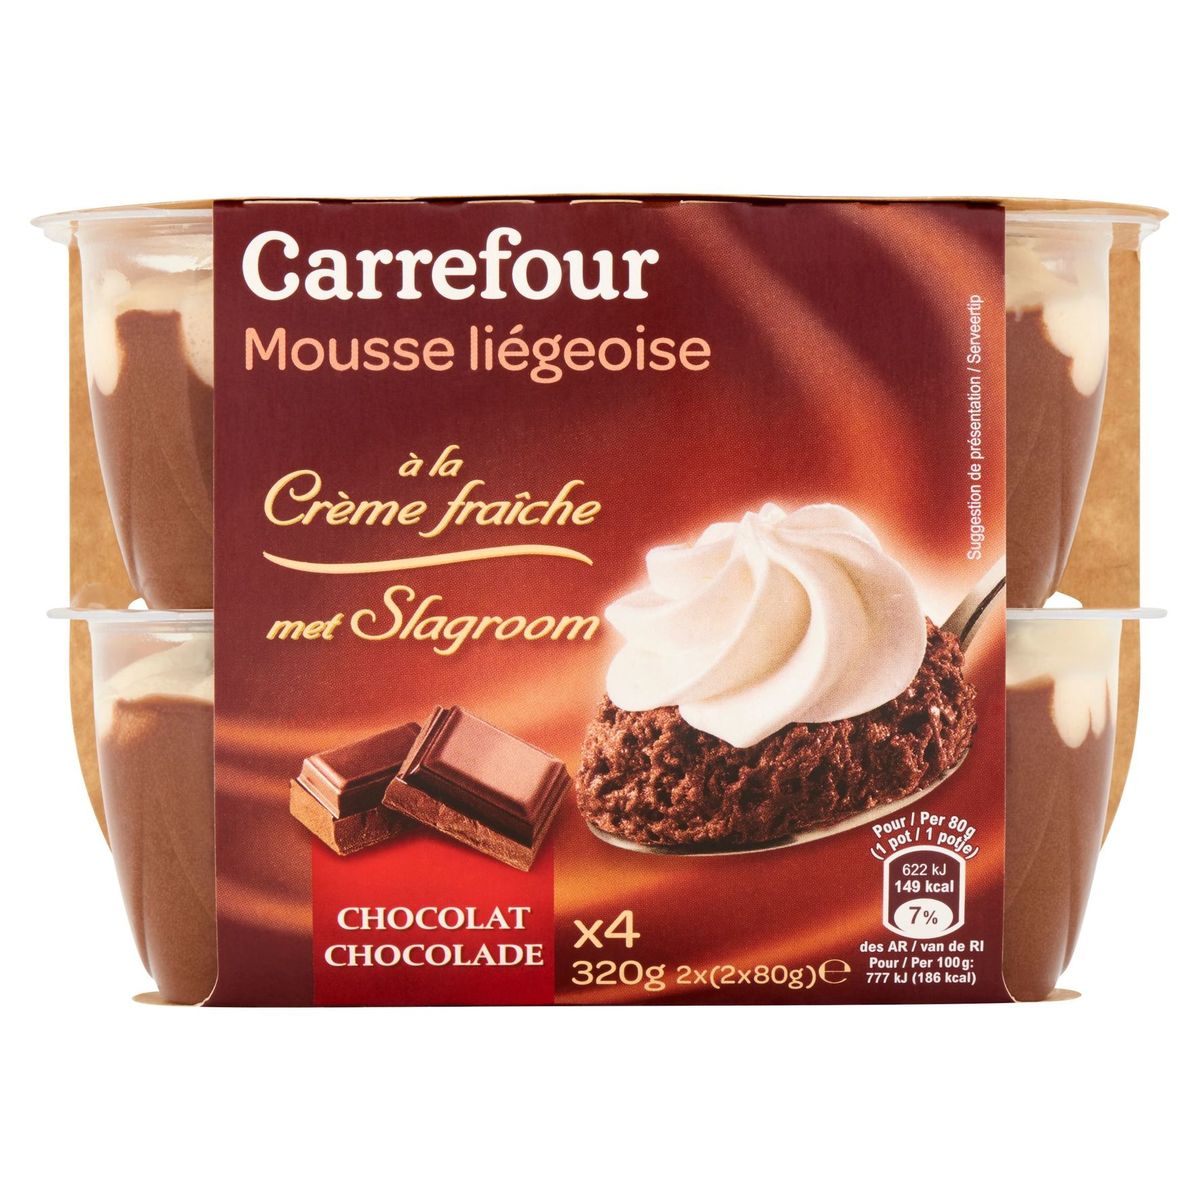 Carrefour Mousse Liégeoise met Slagroom Chocolade 2 x (2 x 80 g)